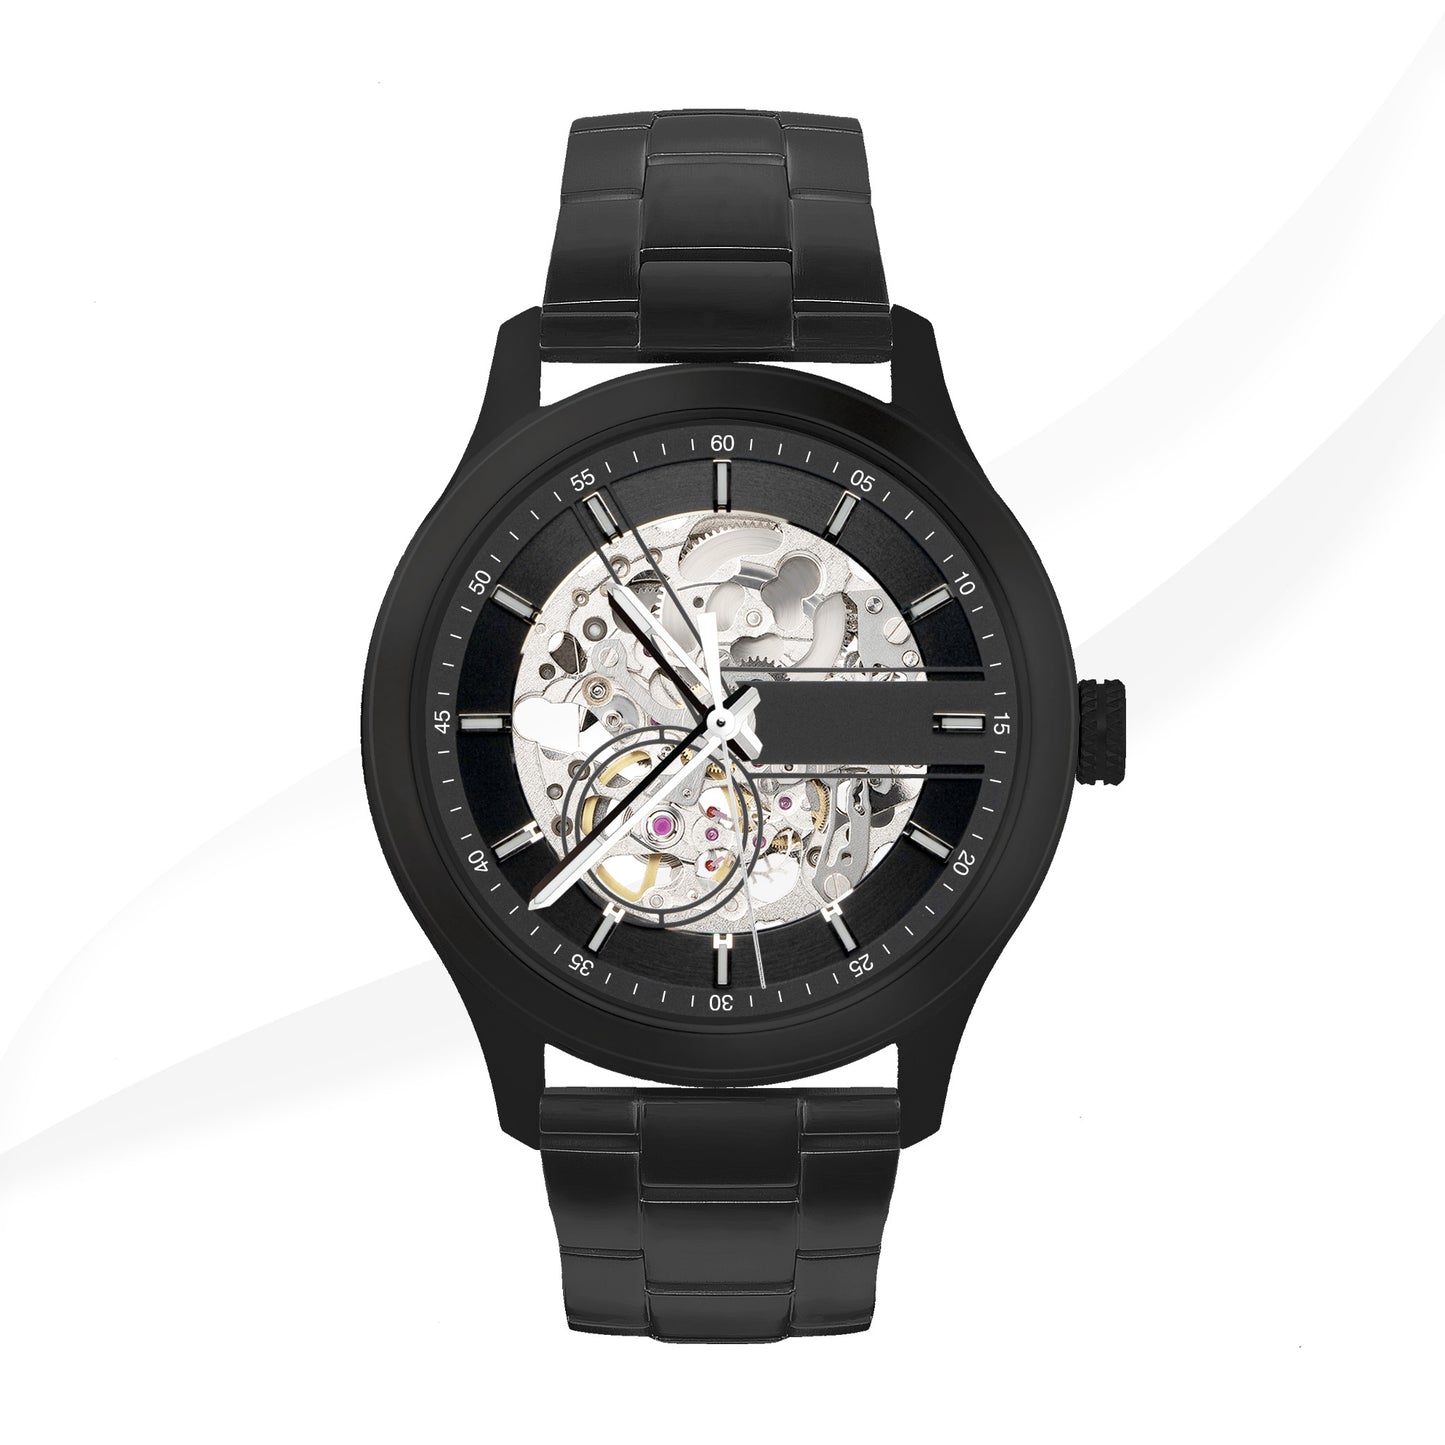 EONIQ - All Black Custom Skeleton watch with black bracelet - Navigator s series